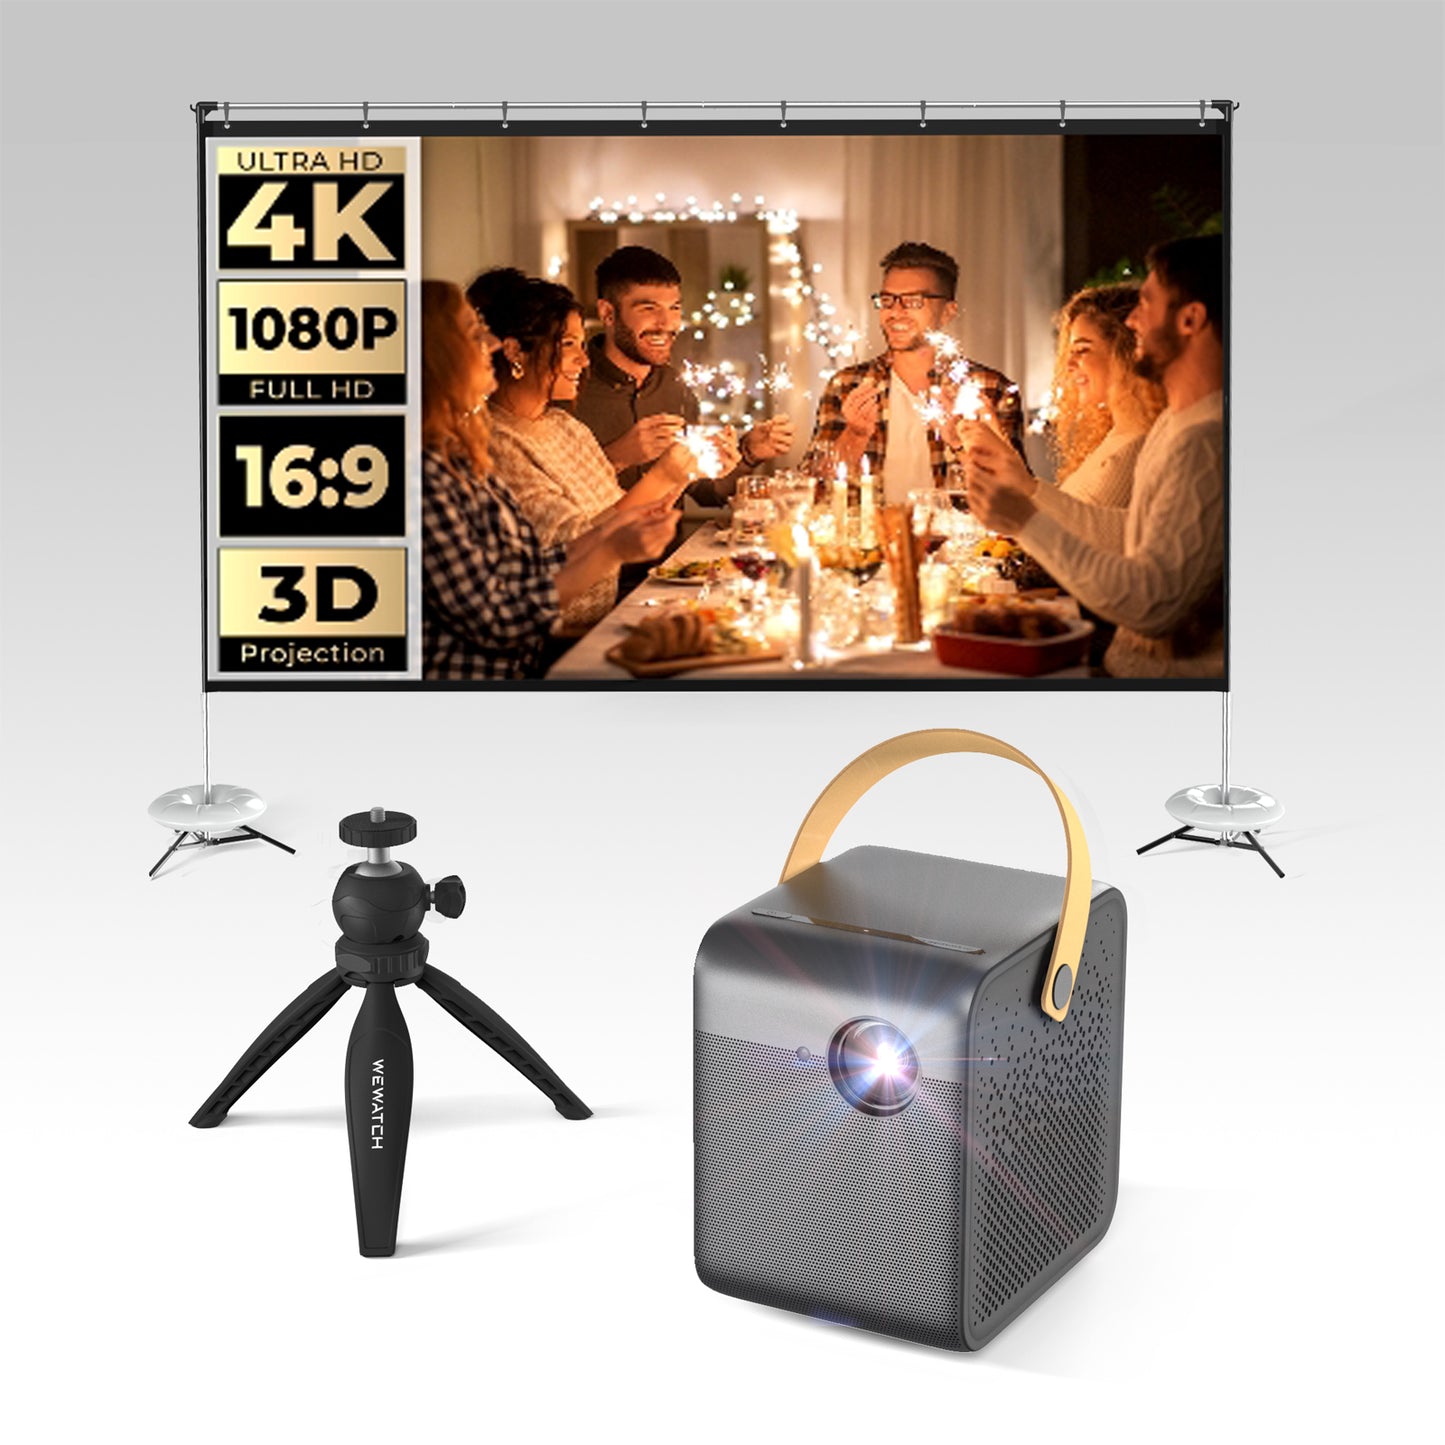 WEMAX DICE 700 ANSI Lumen Native 1080p Portable Android TV 9.0 Projecteur